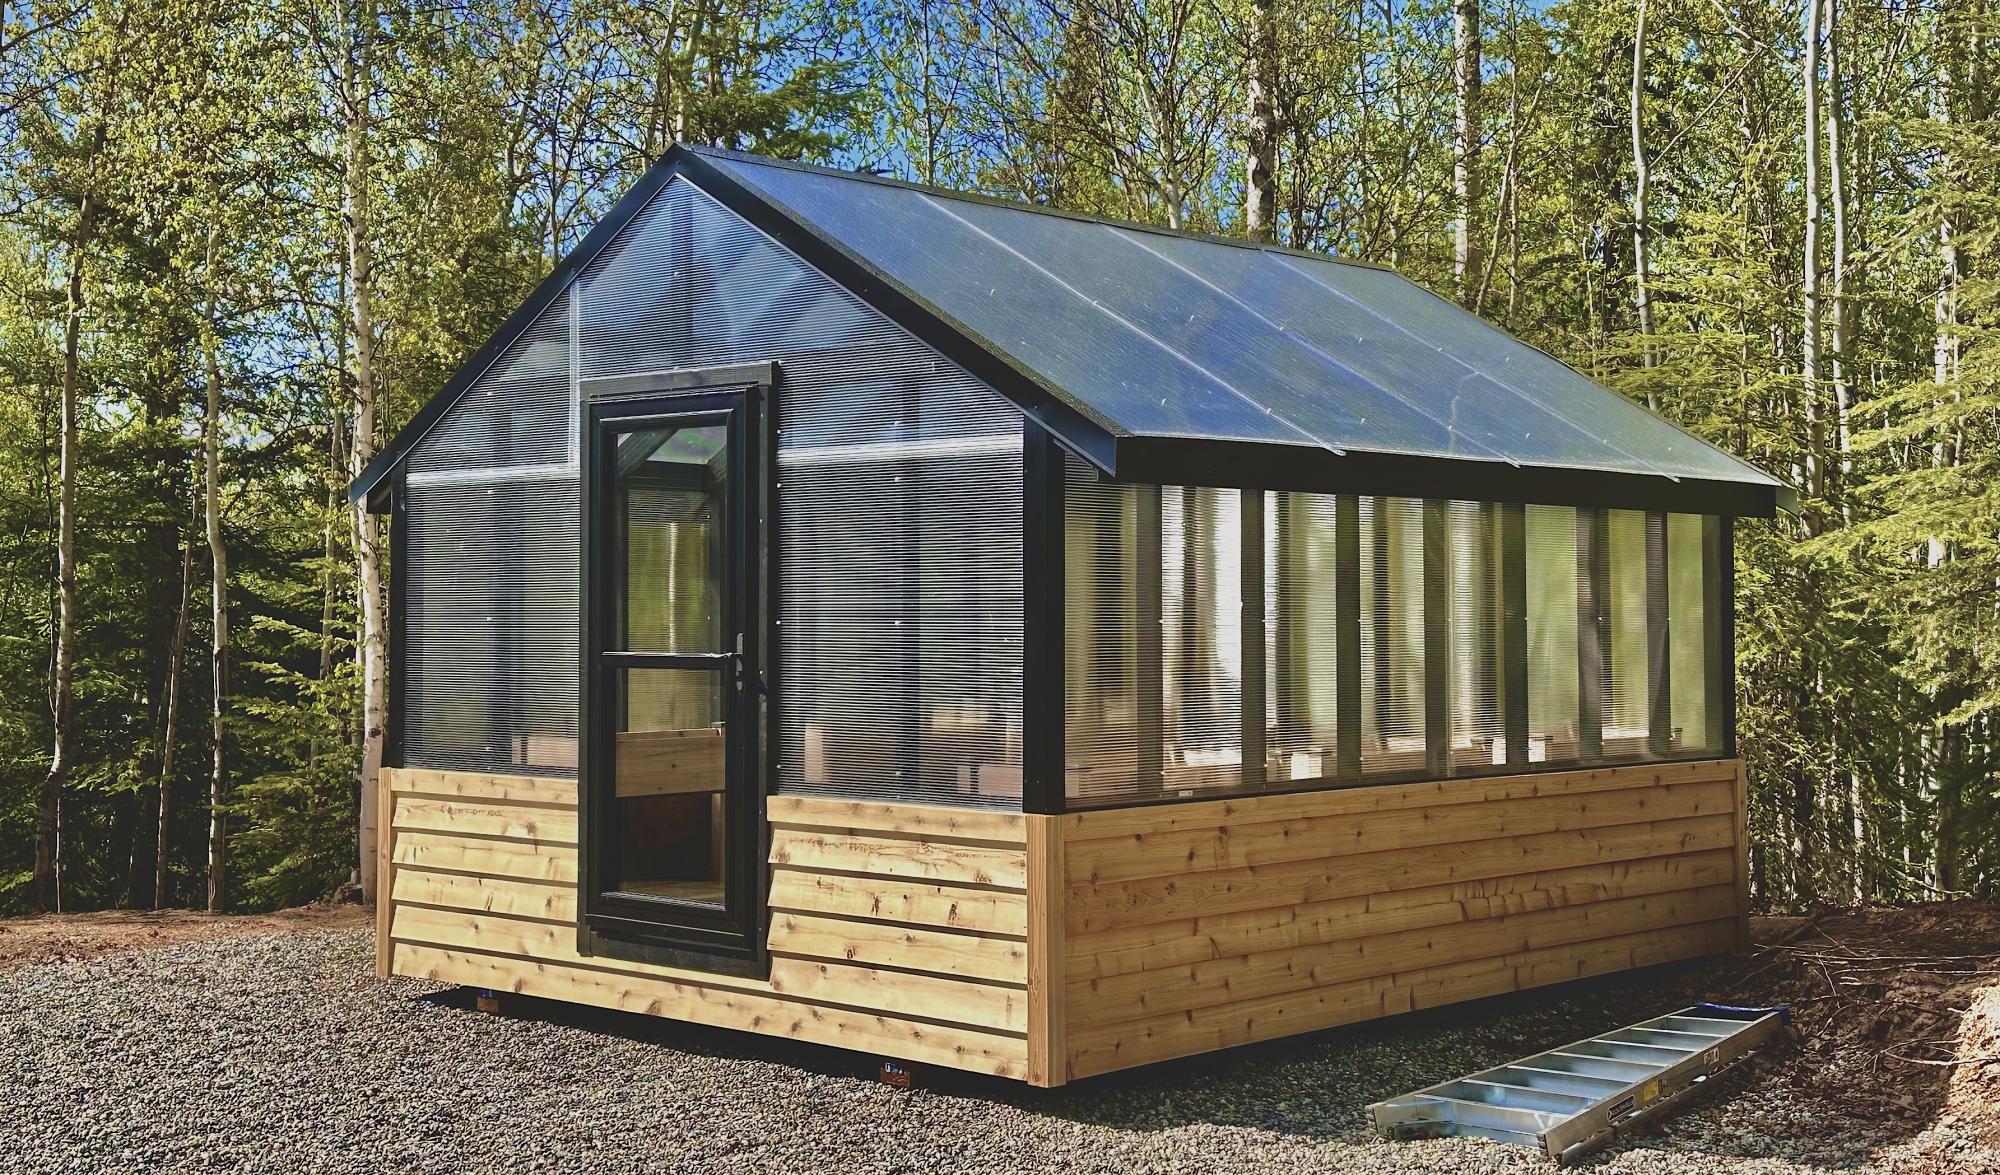 free greenhouse plans